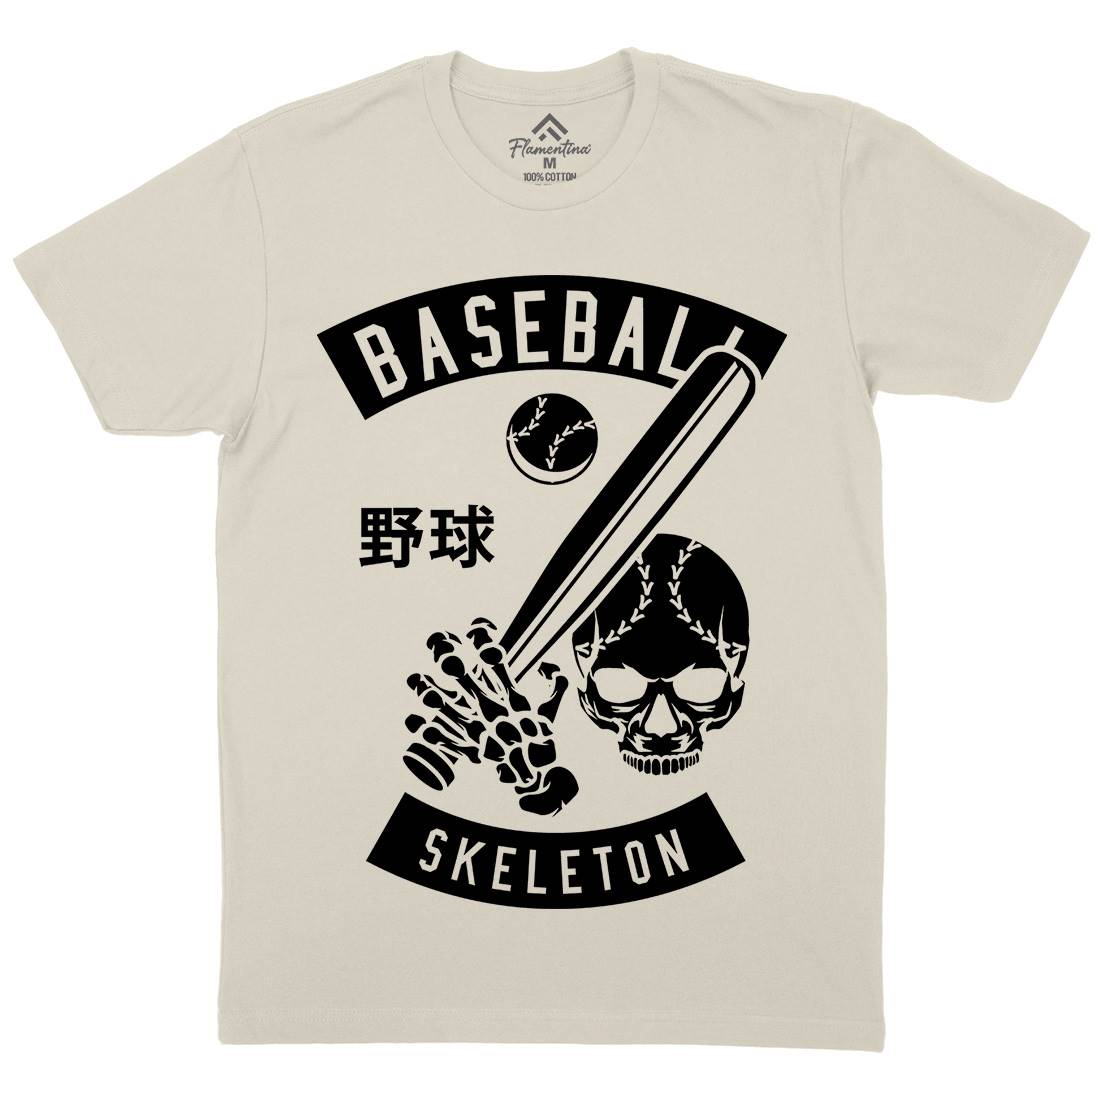 Baseball Skeleton Mens Organic Crew Neck T-Shirt Sport B489